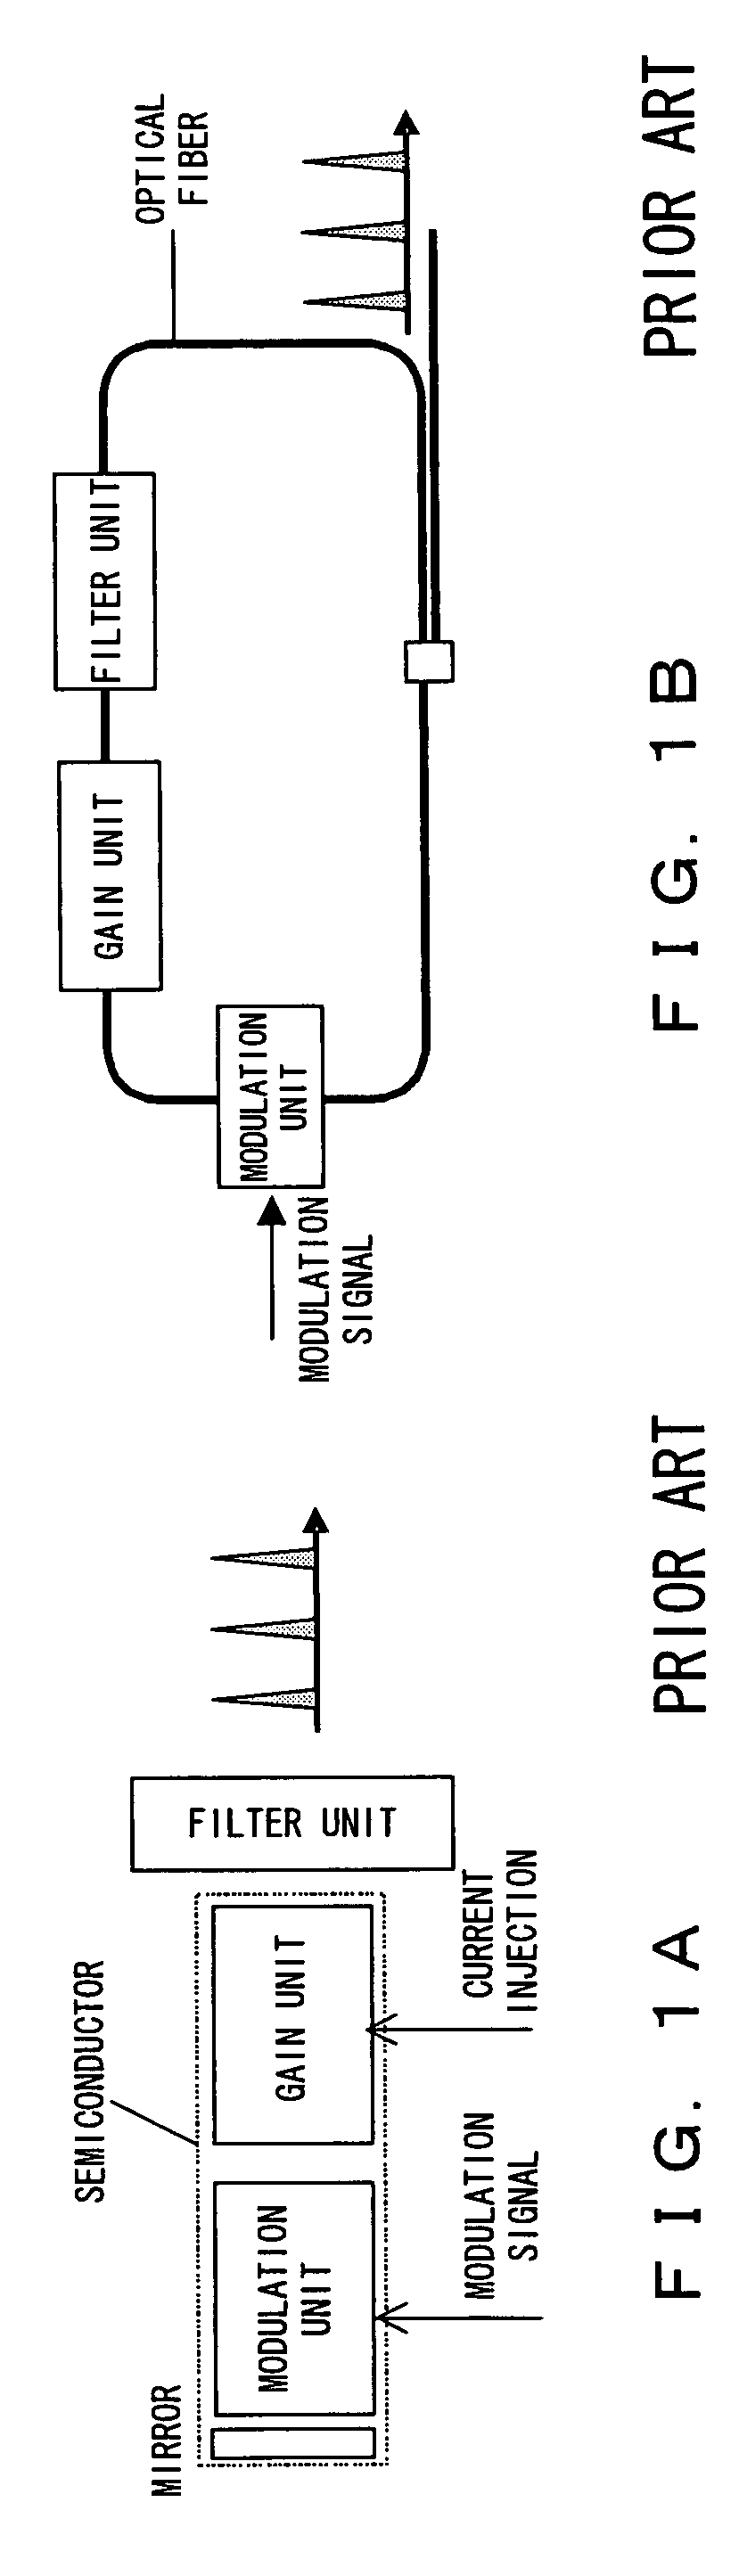 Pulse generating apparatus and method